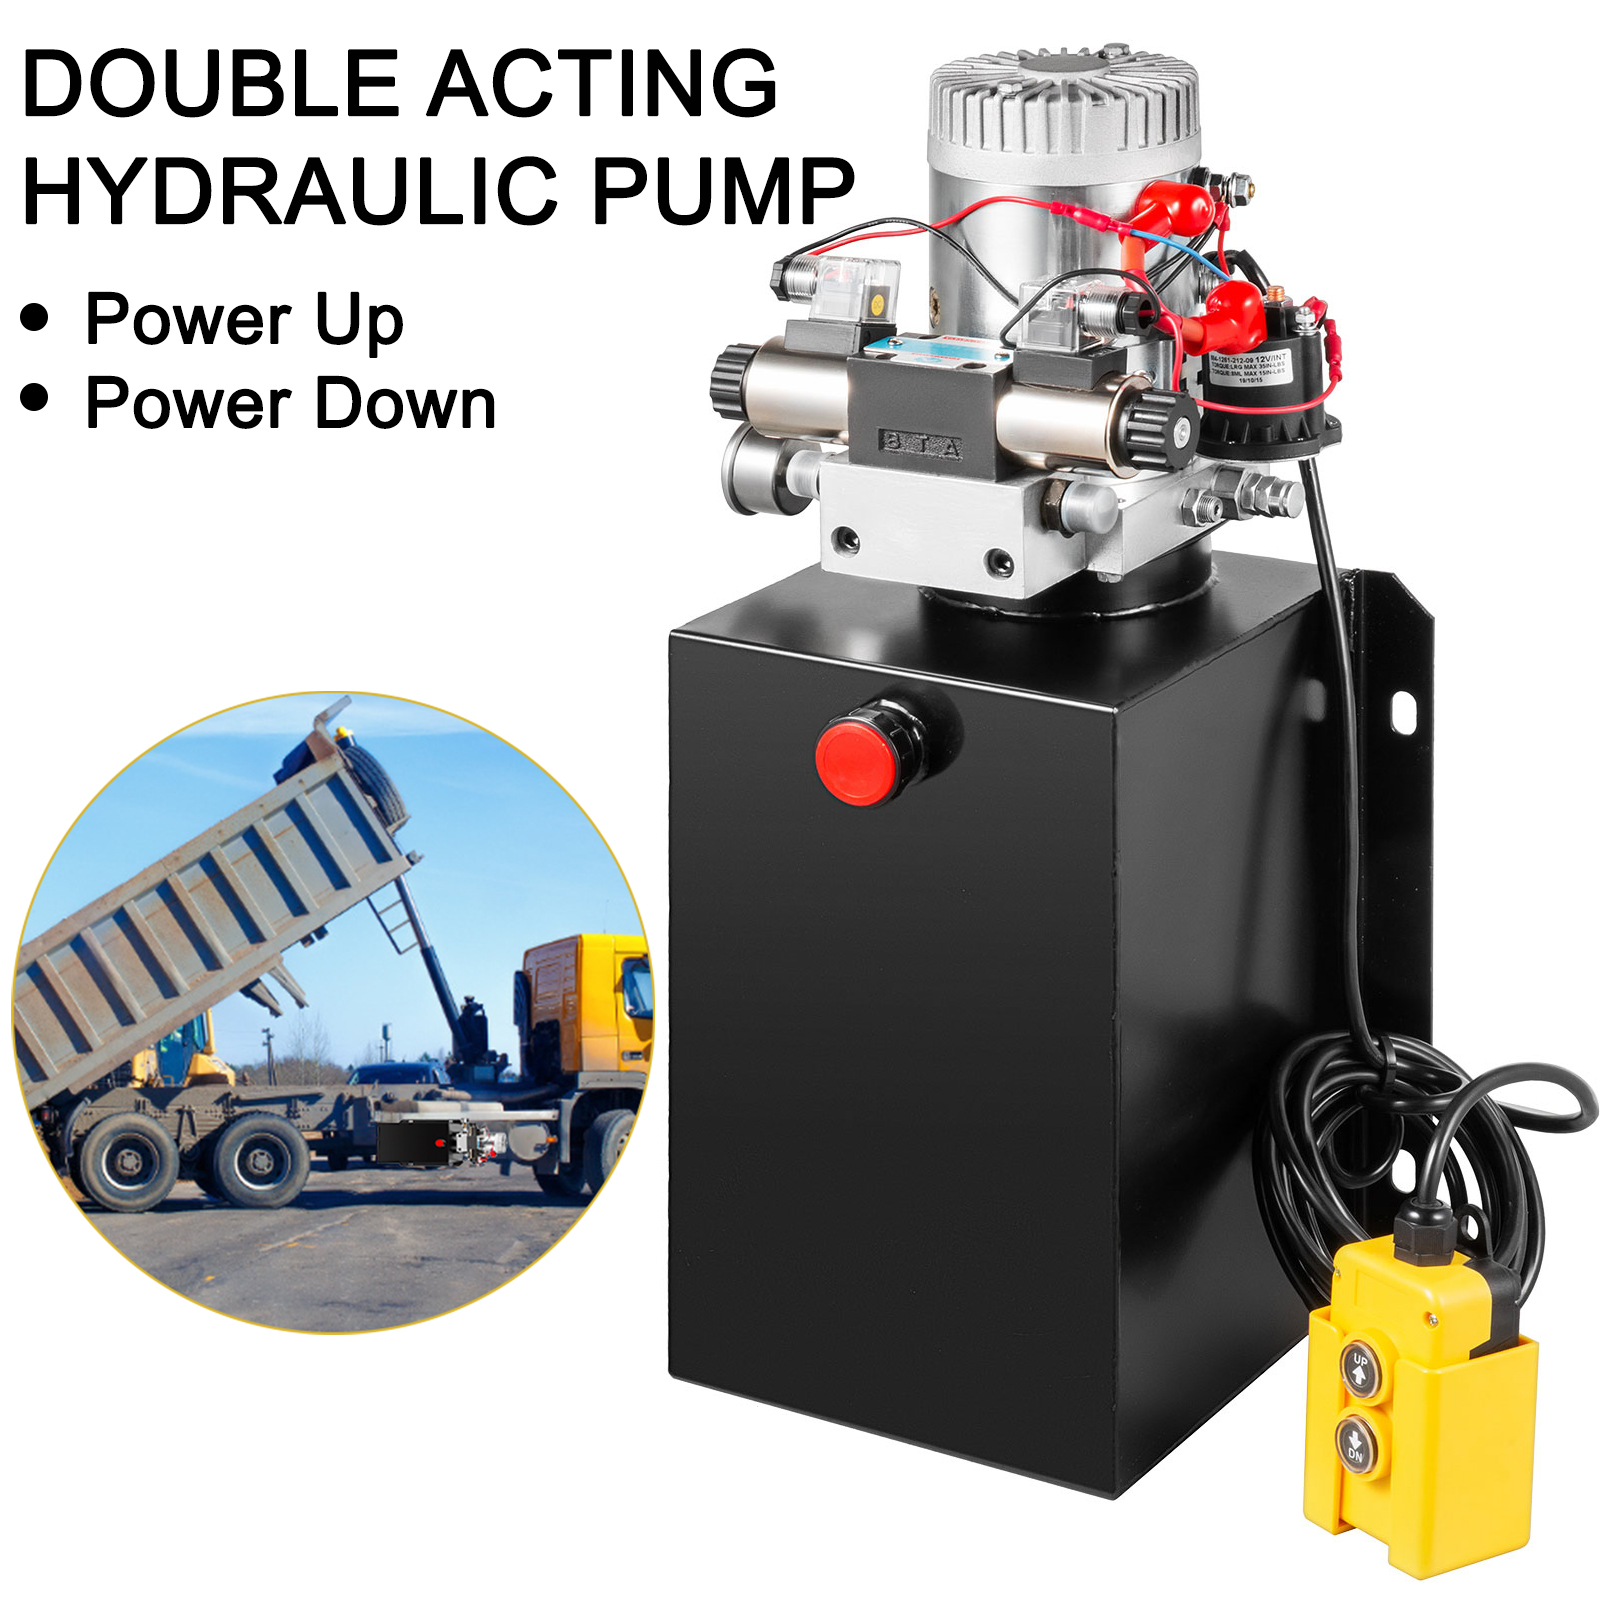 Details about   Hydraulic Power Unit Double Acting w/ Pressure Gauge Hydraulic Pump 8 Quart 